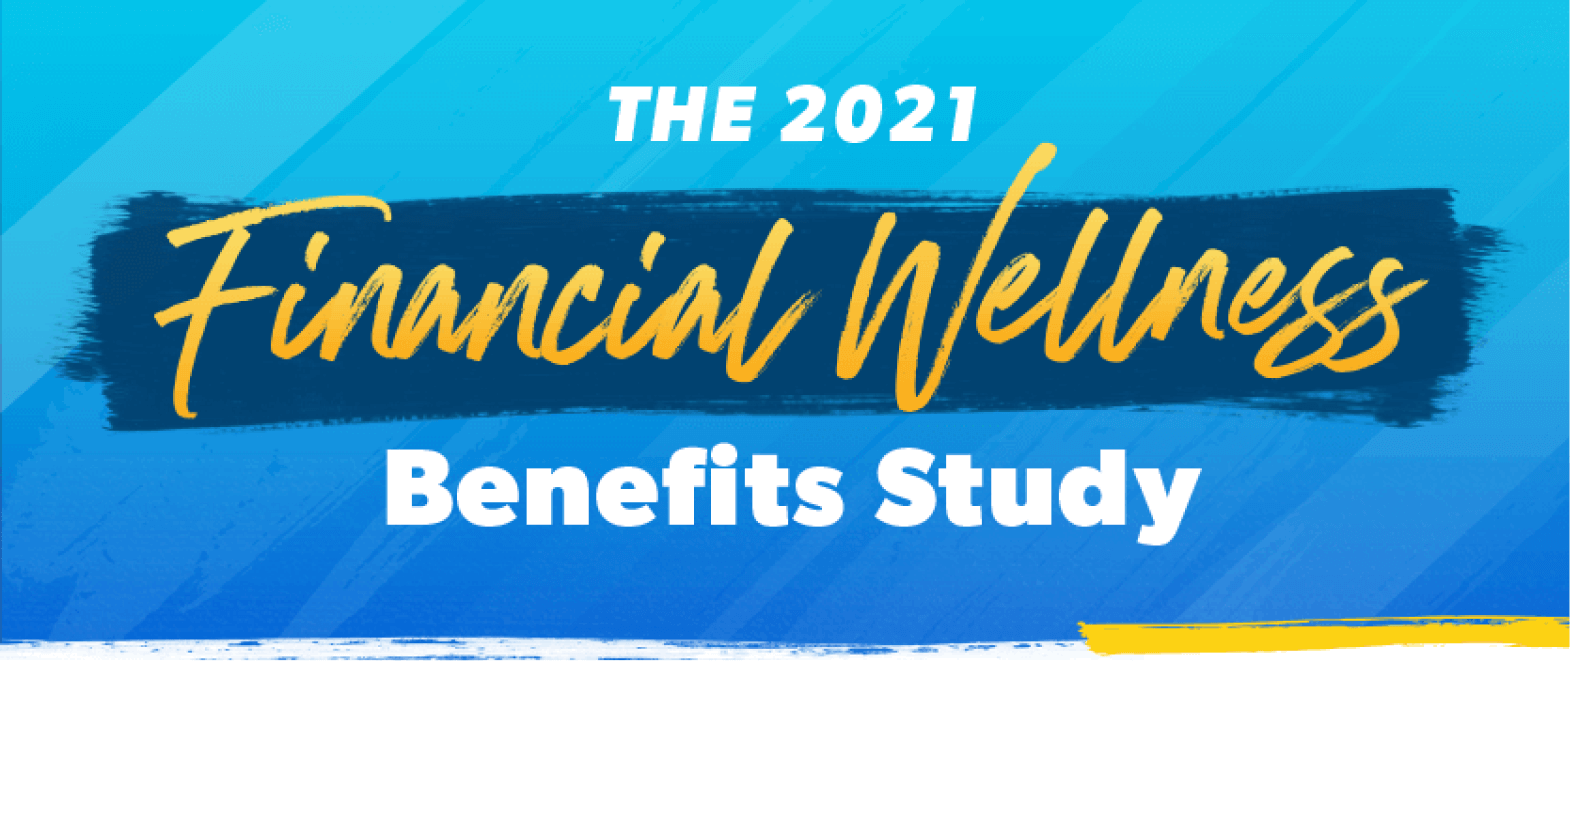 The 2021 Financial Wellness Benefits Study